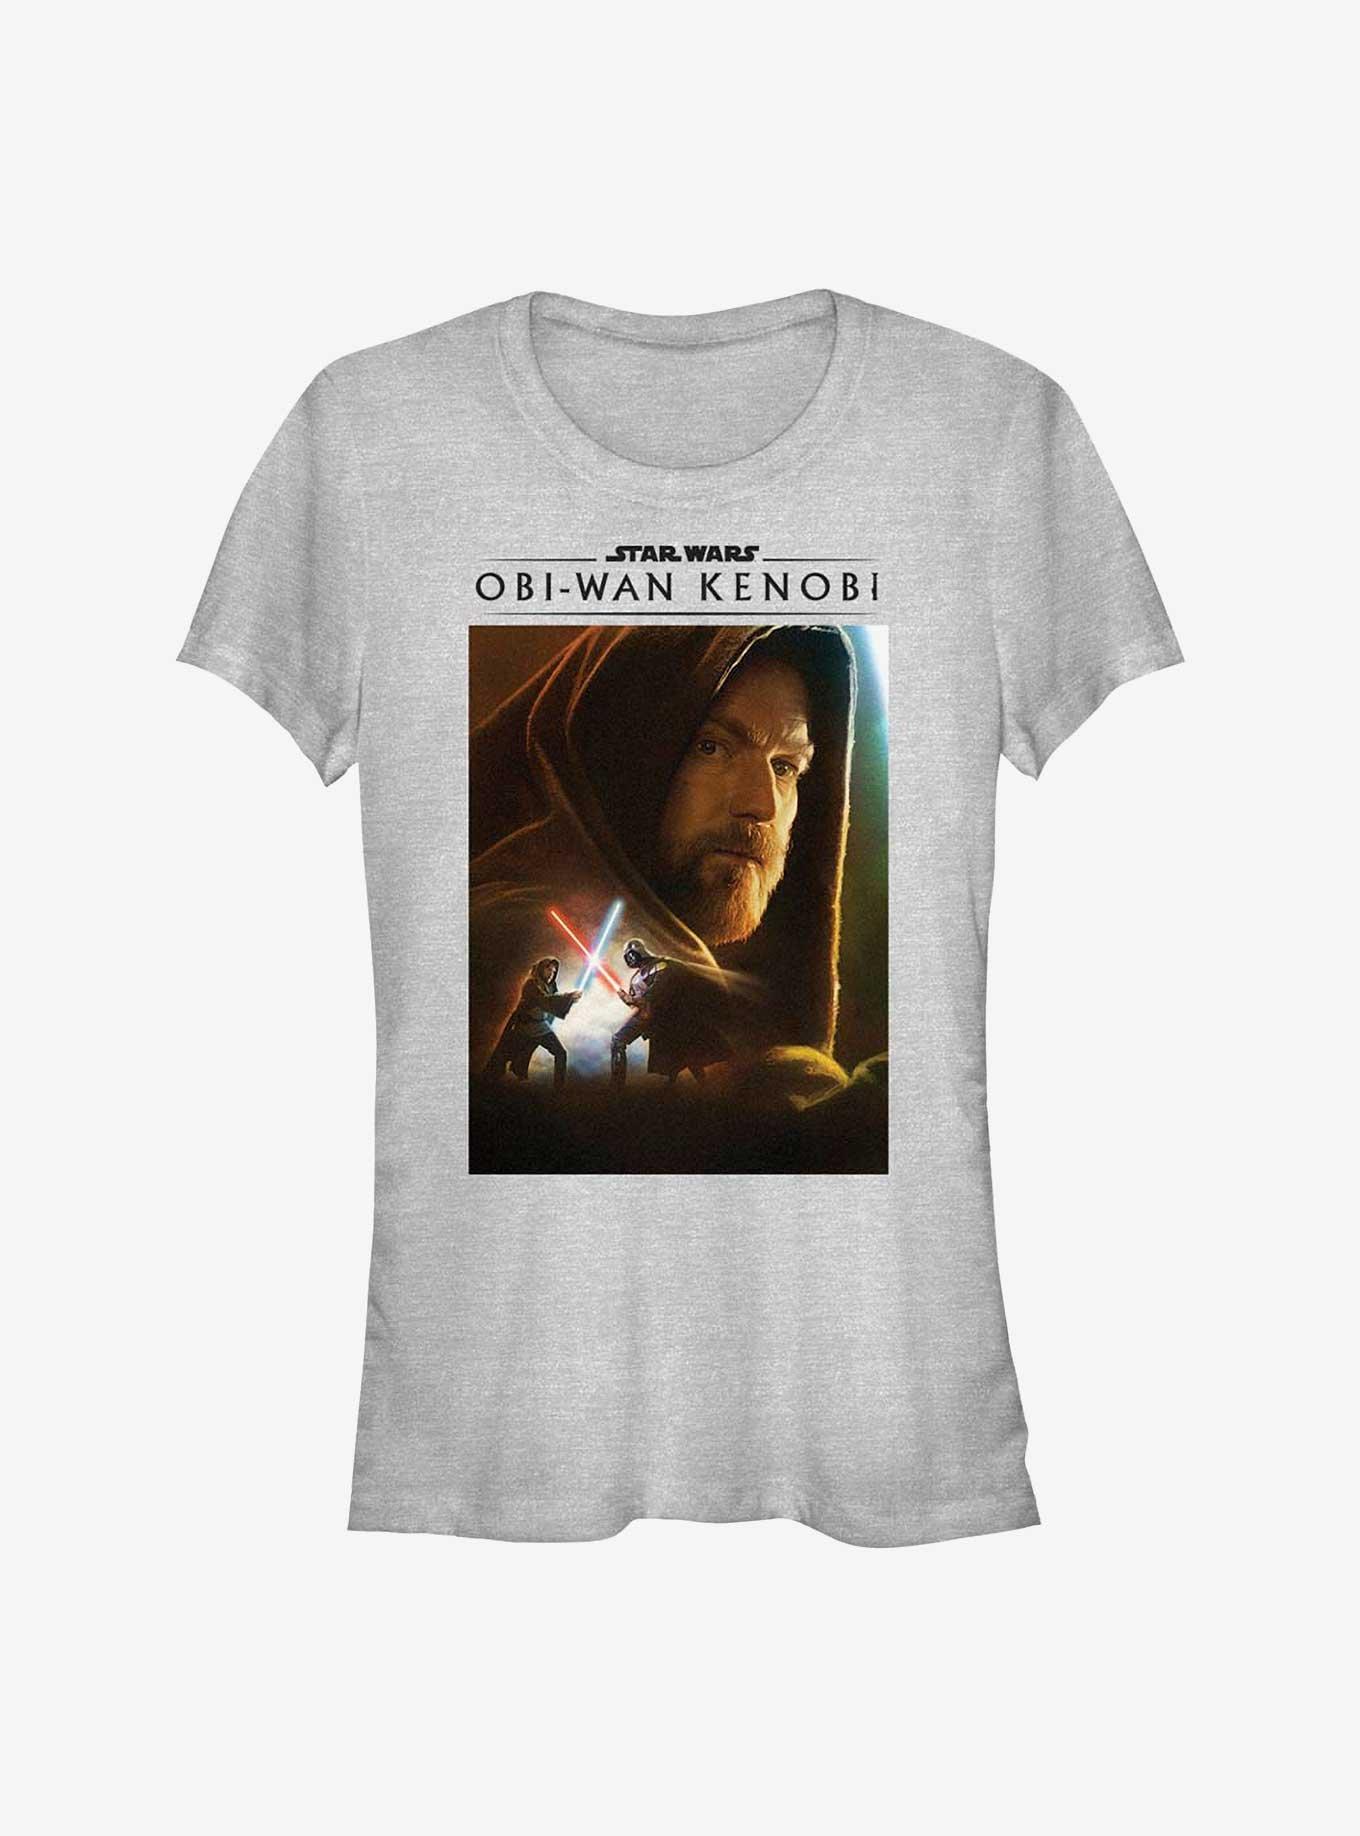 Star Wars Obi-Wan Kenobi Poster Girls T-Shirt